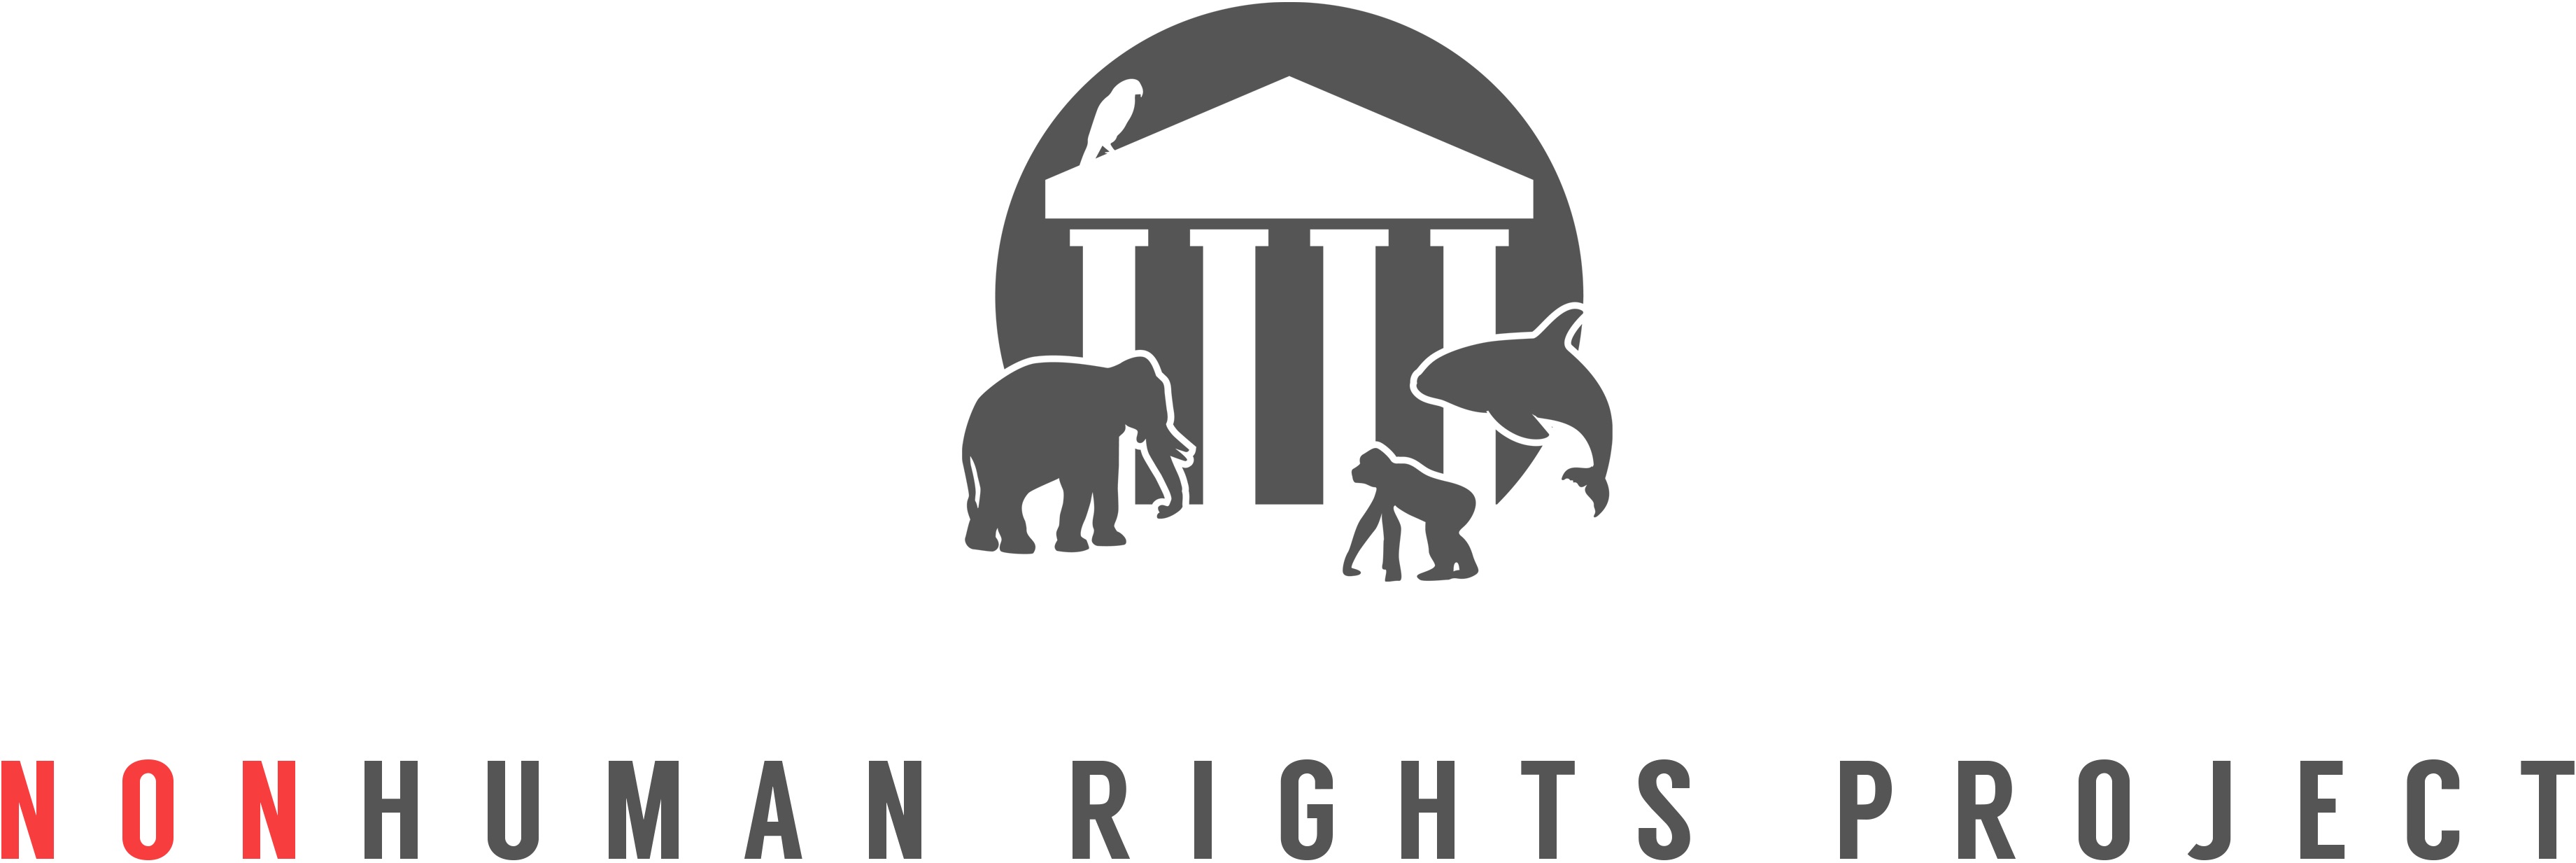 Nonhuman Rights Proj